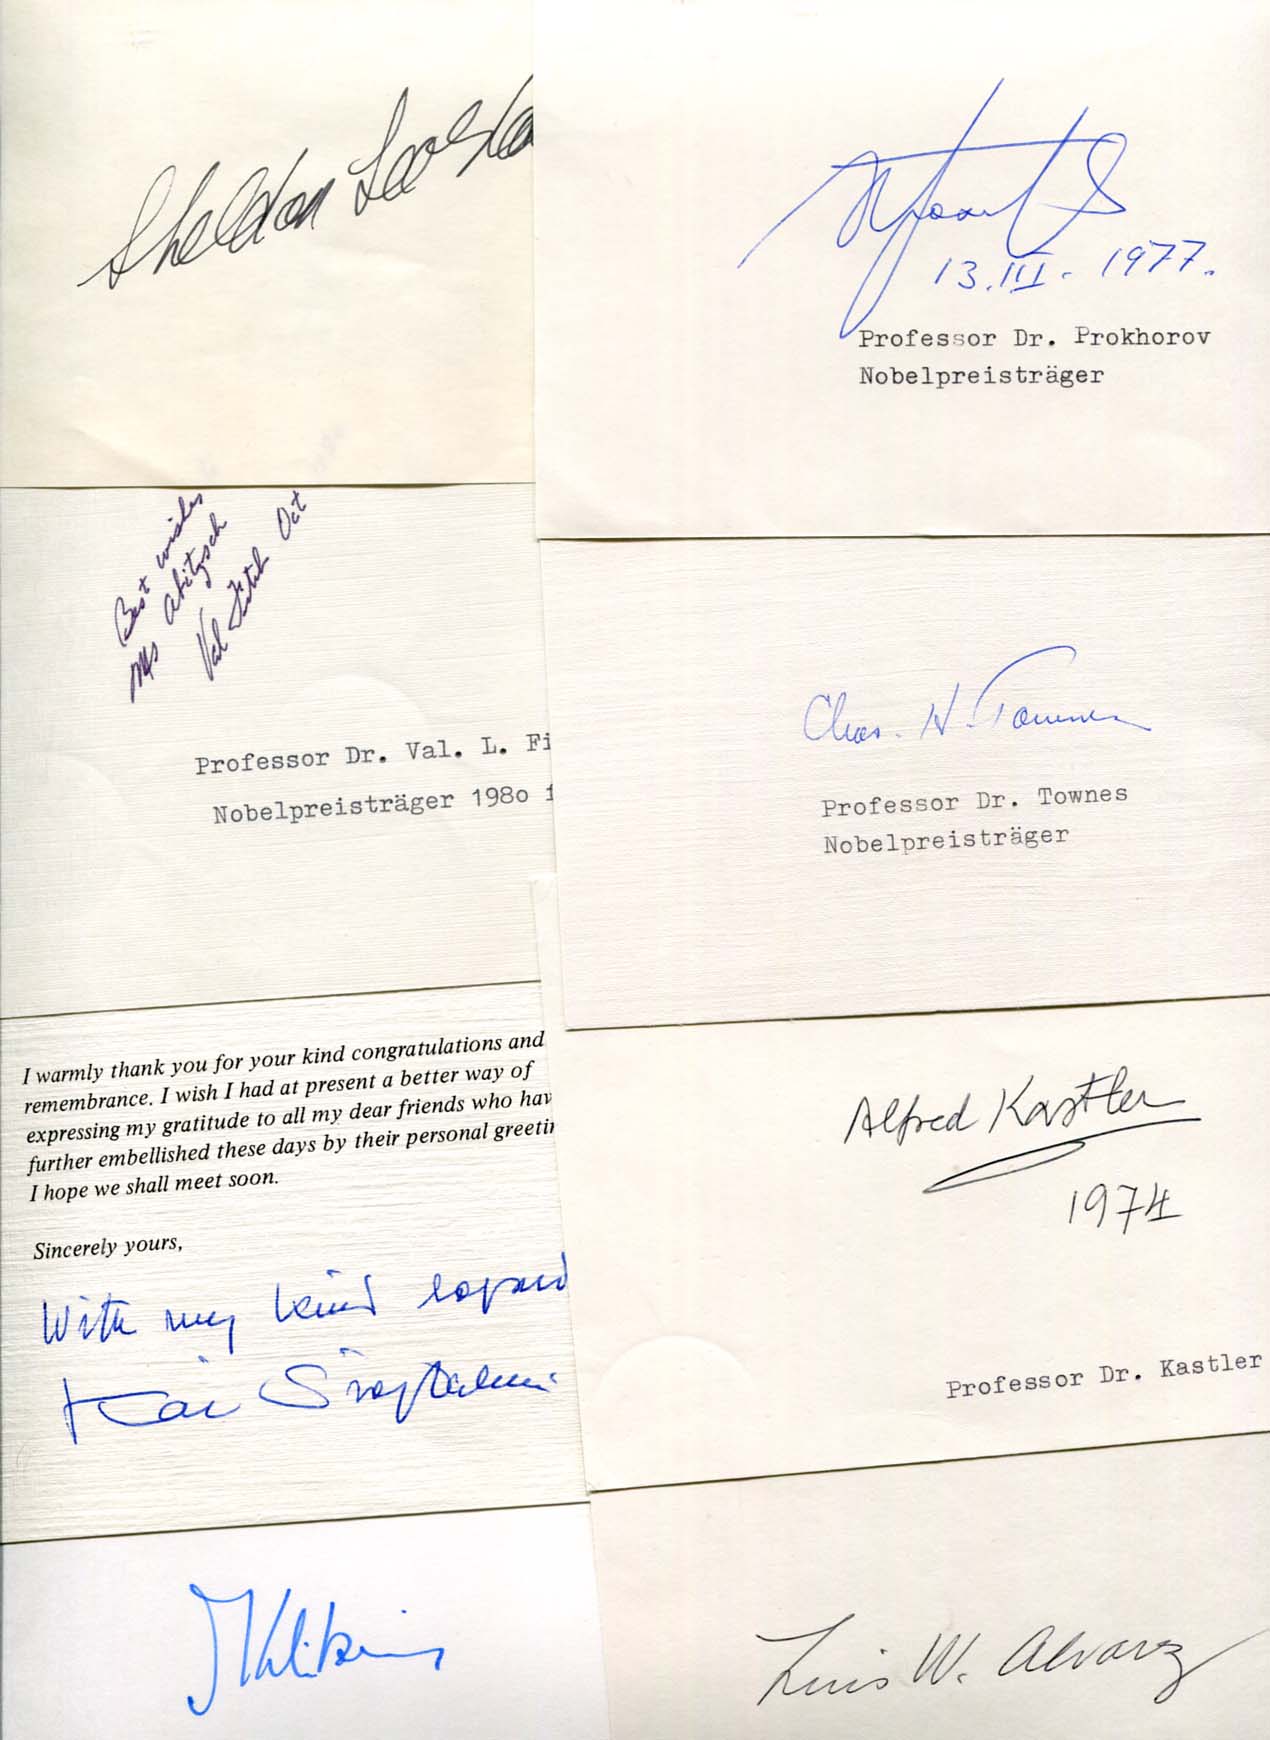  Physics Nobel Prize Winners Autograph Autogramm | ID 7869161046165